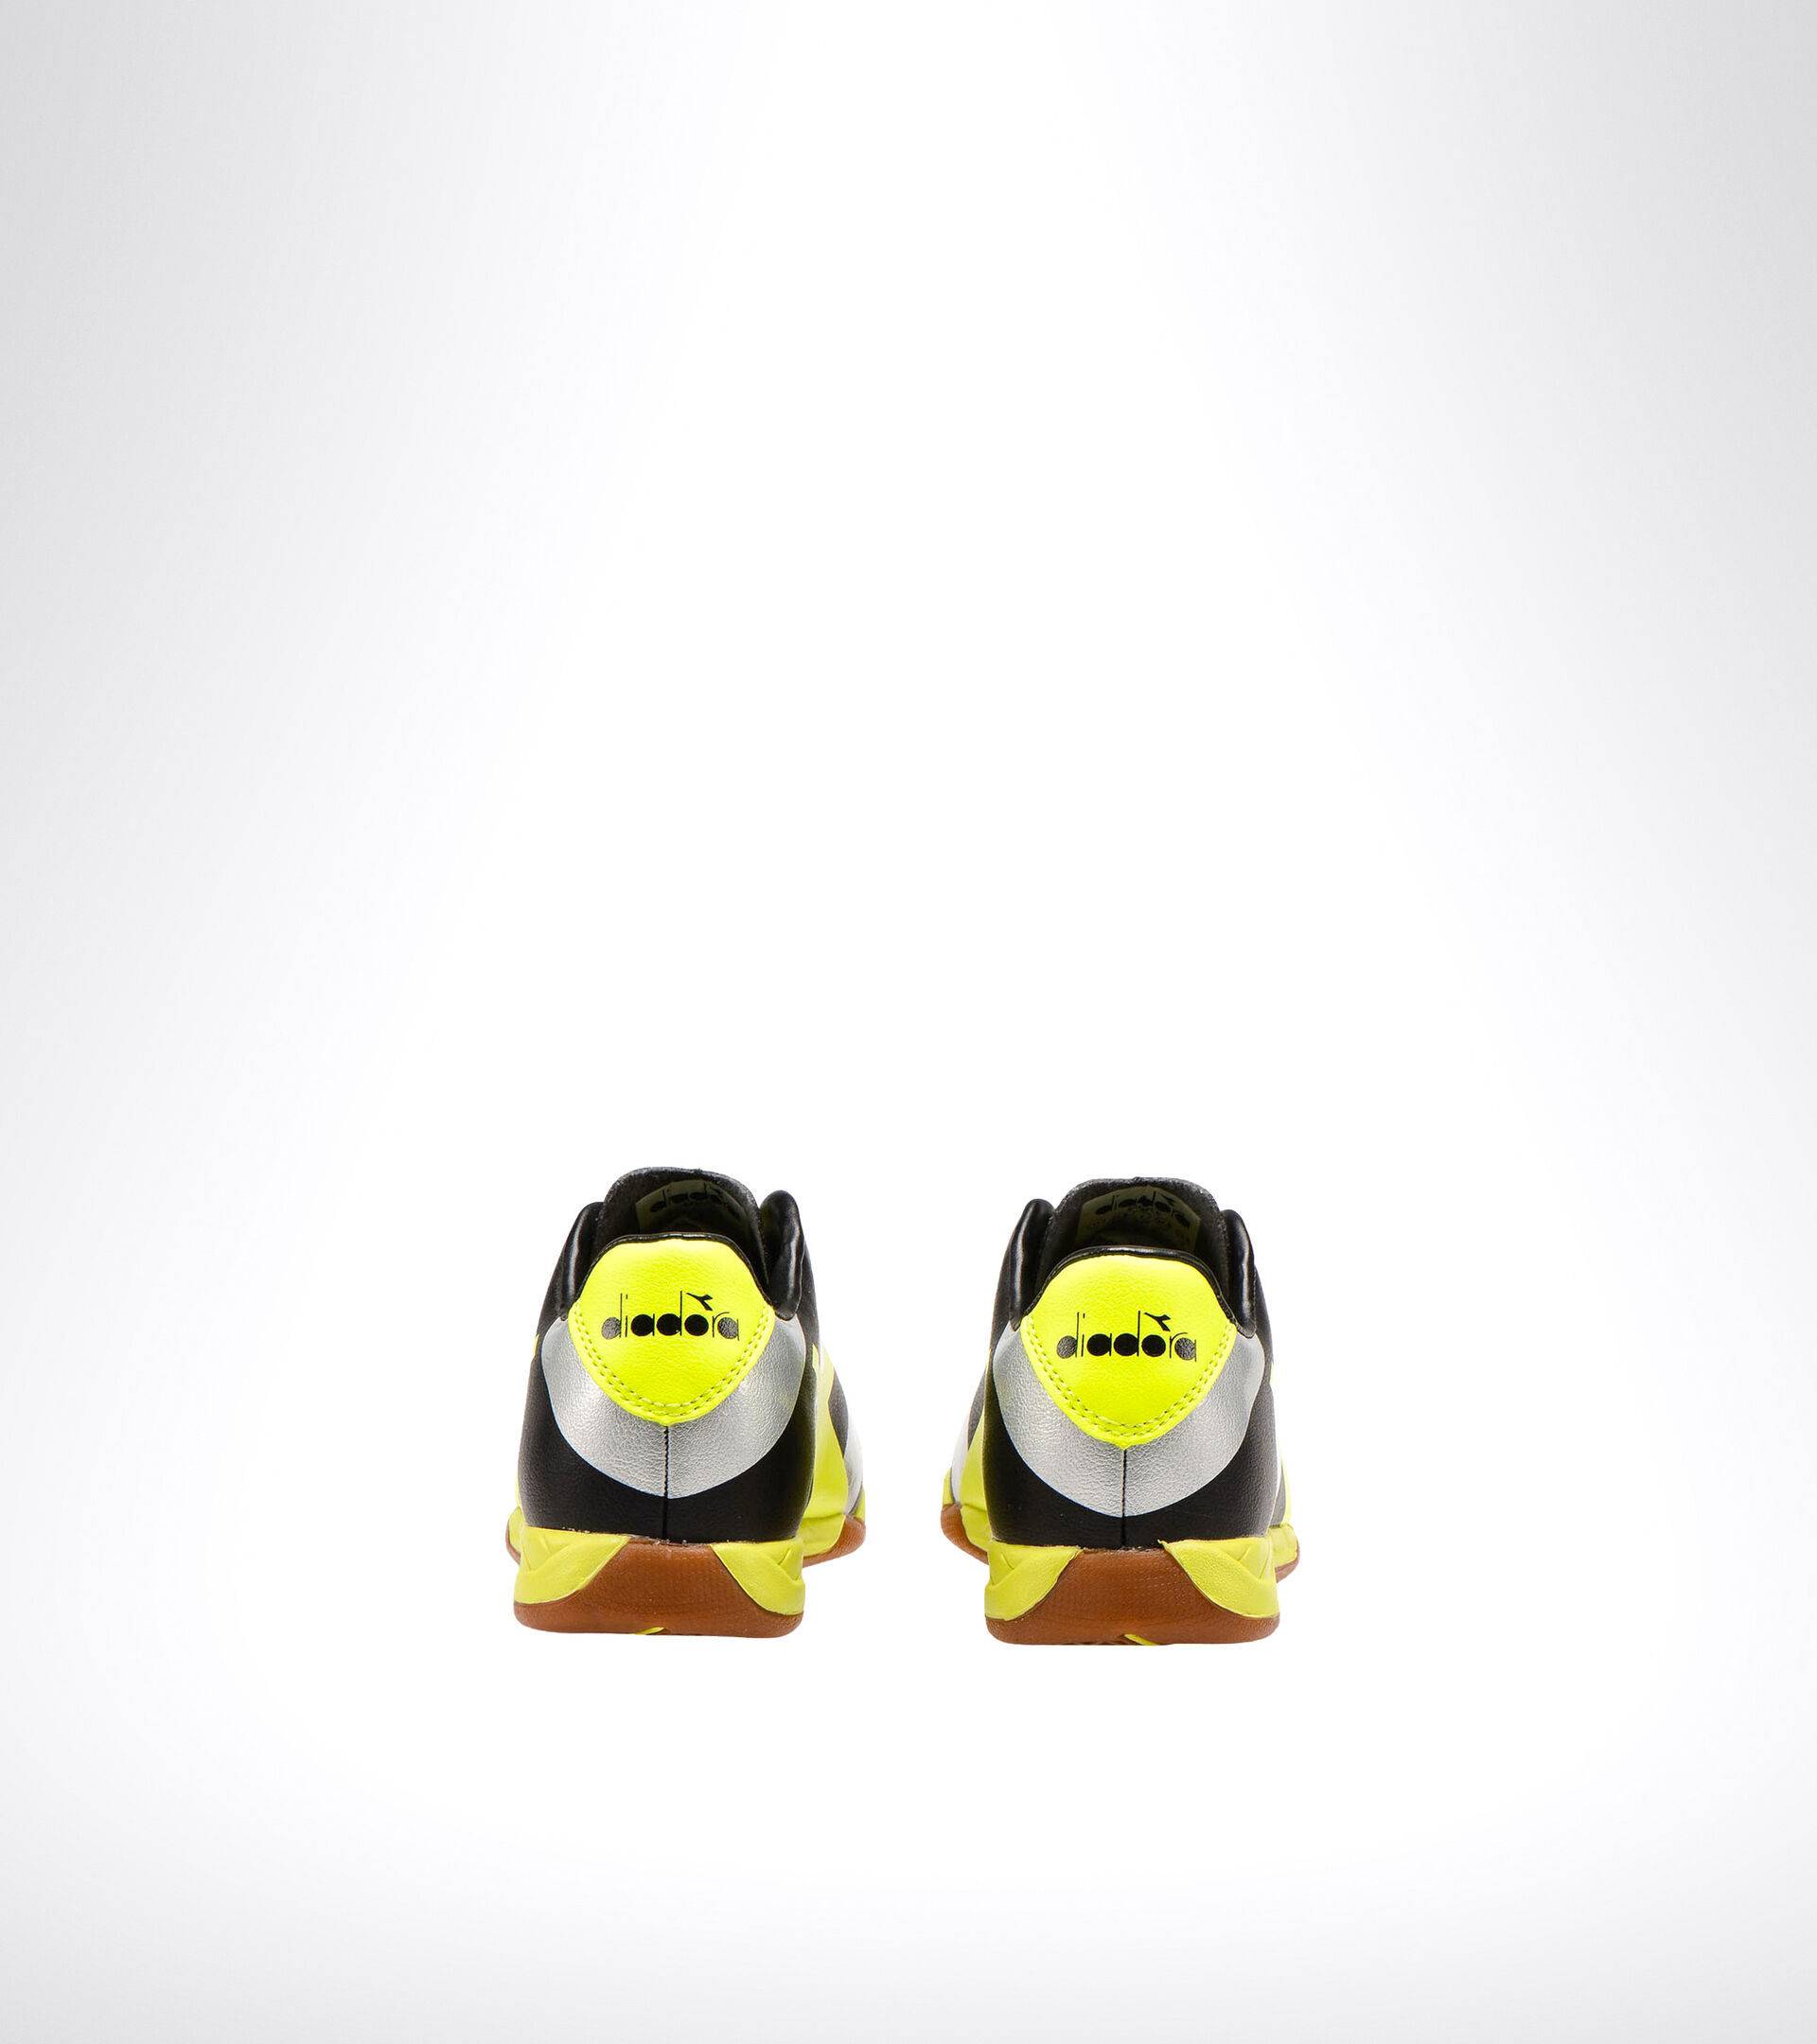 Chaussures de football pour salle - Unisexe Enfant RAPTOR R ID JR NERO/ARGENTO/GIALLO FL DD - Diadora